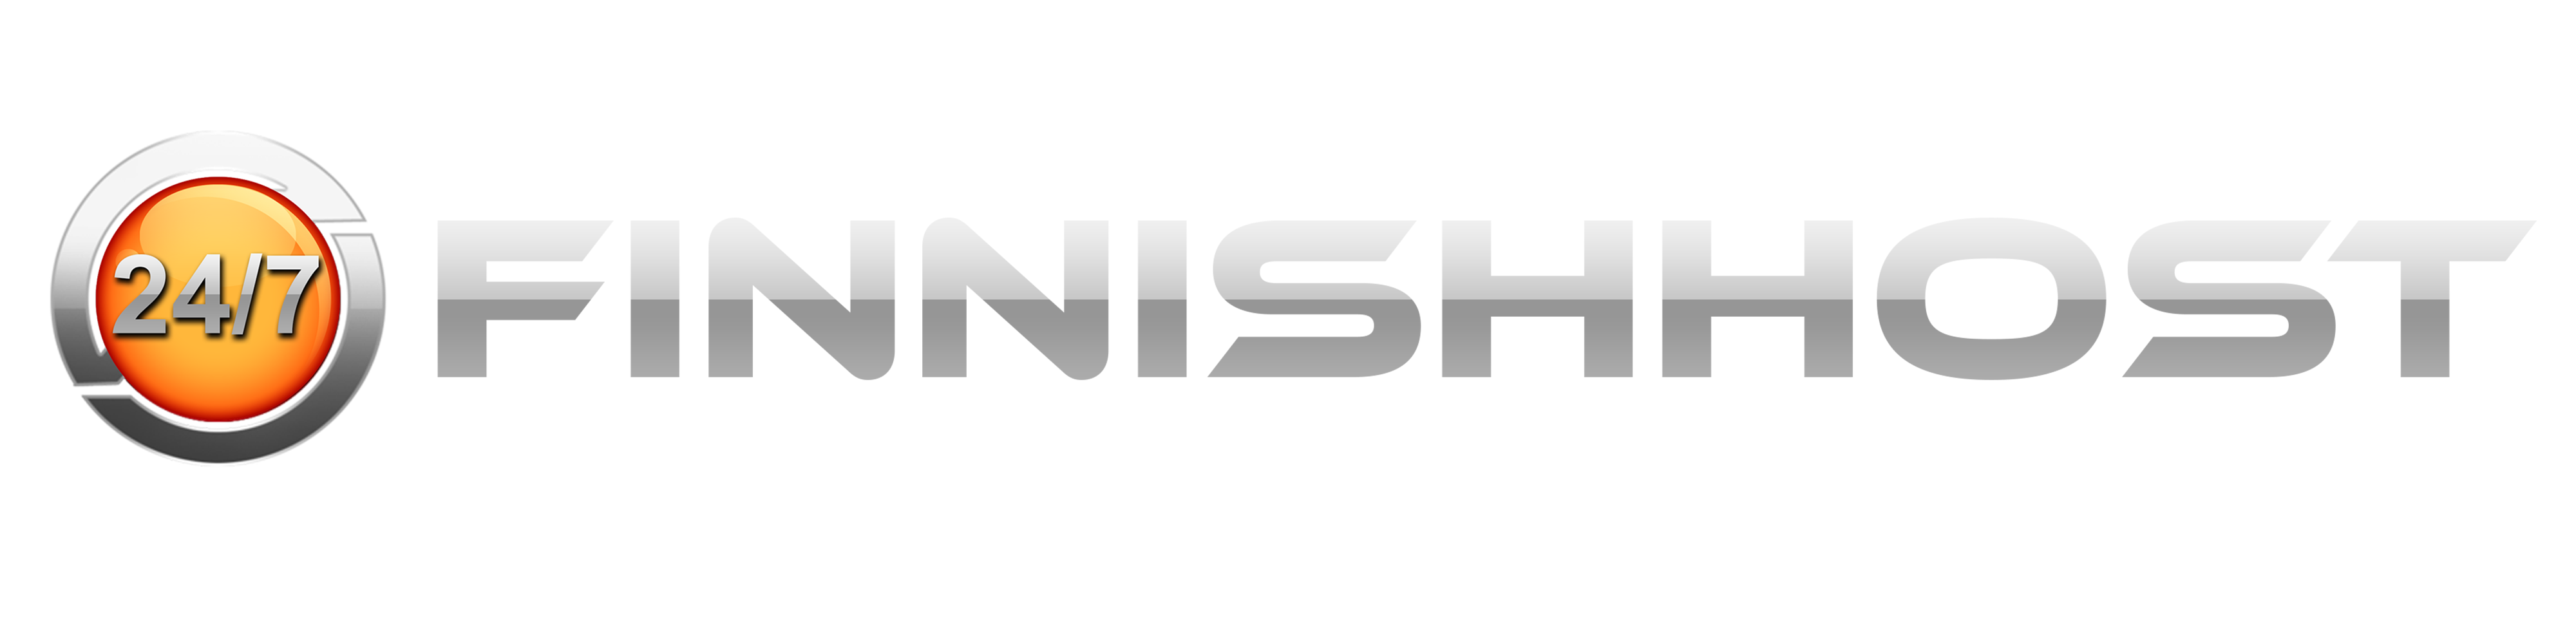 FinnishHost logo